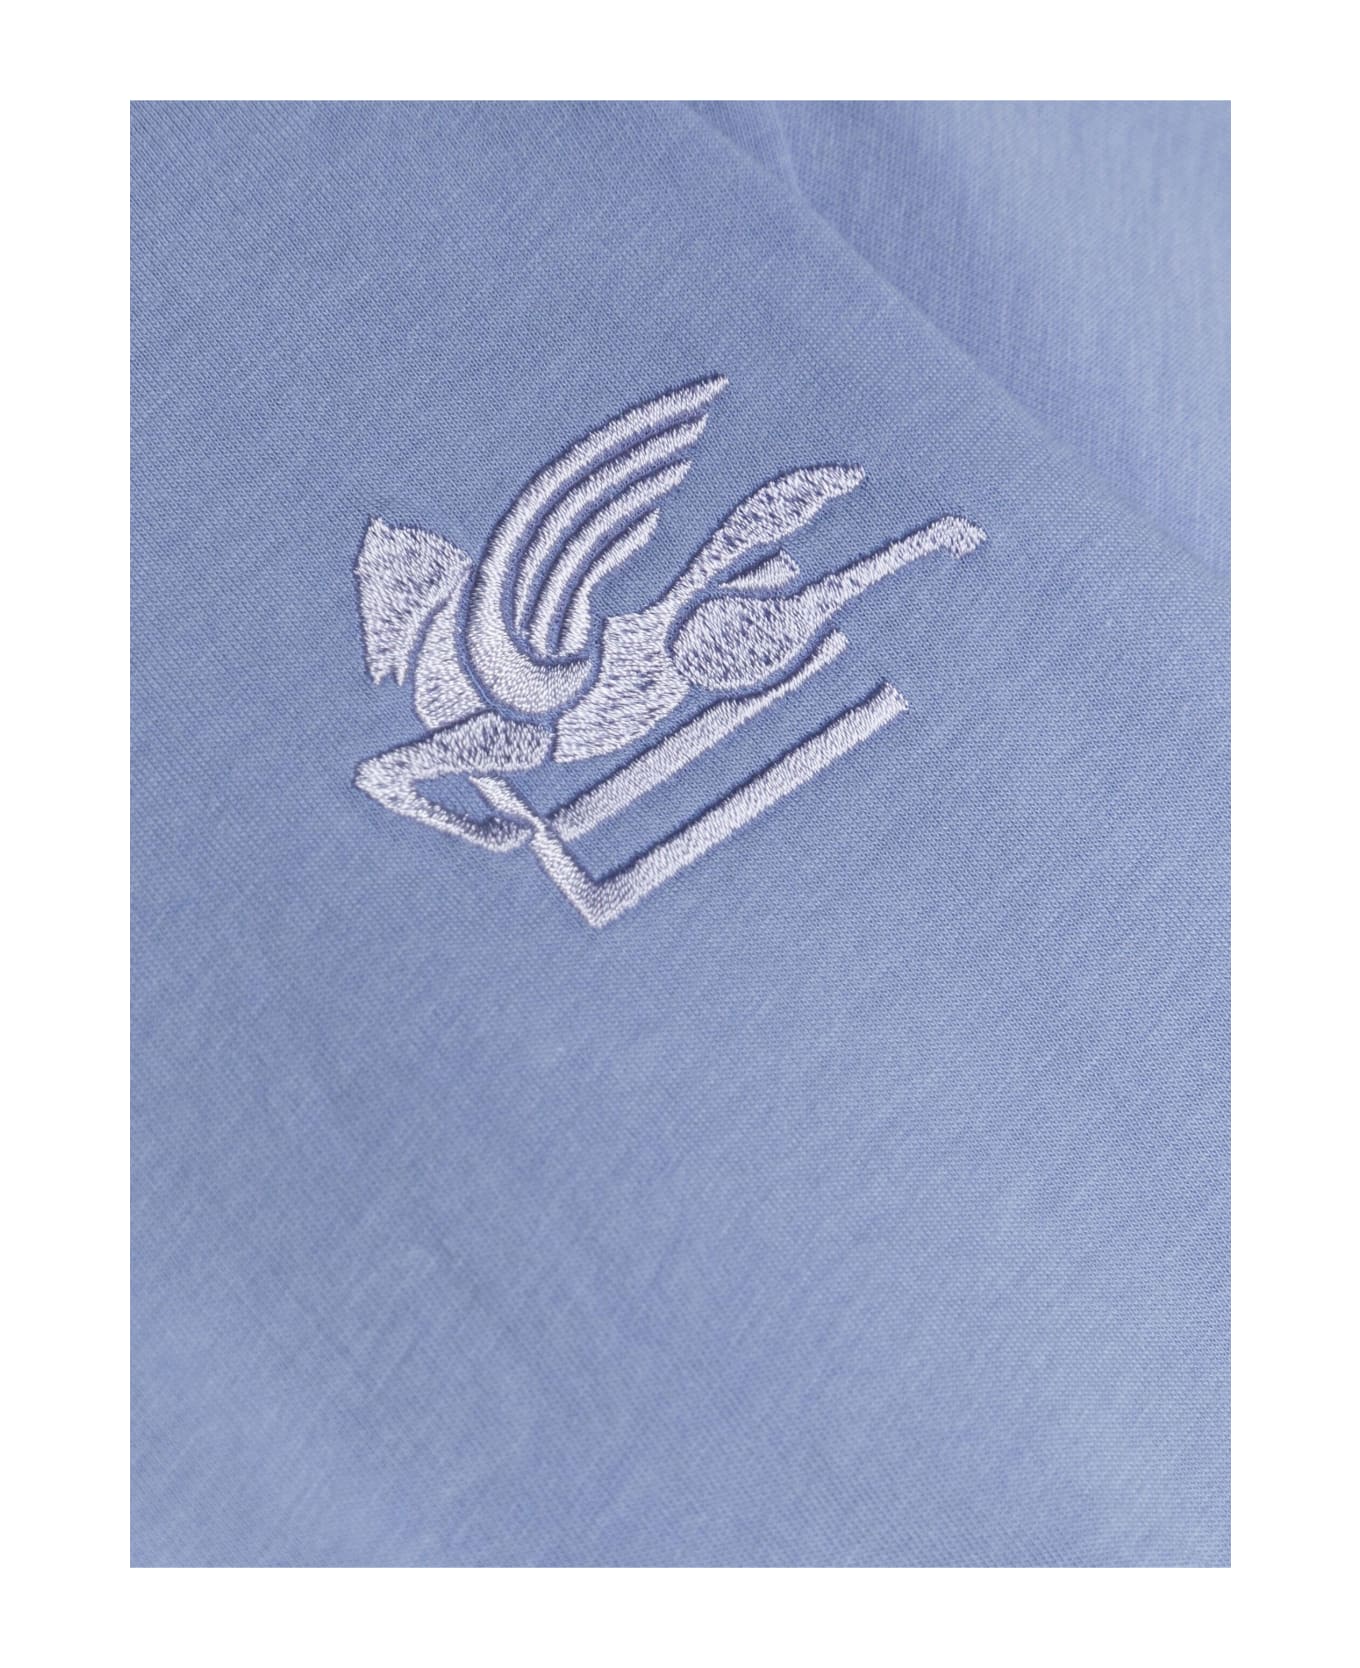 Etro Light Blue Crop T-shirt With Etro Pegaso Logo - Blue